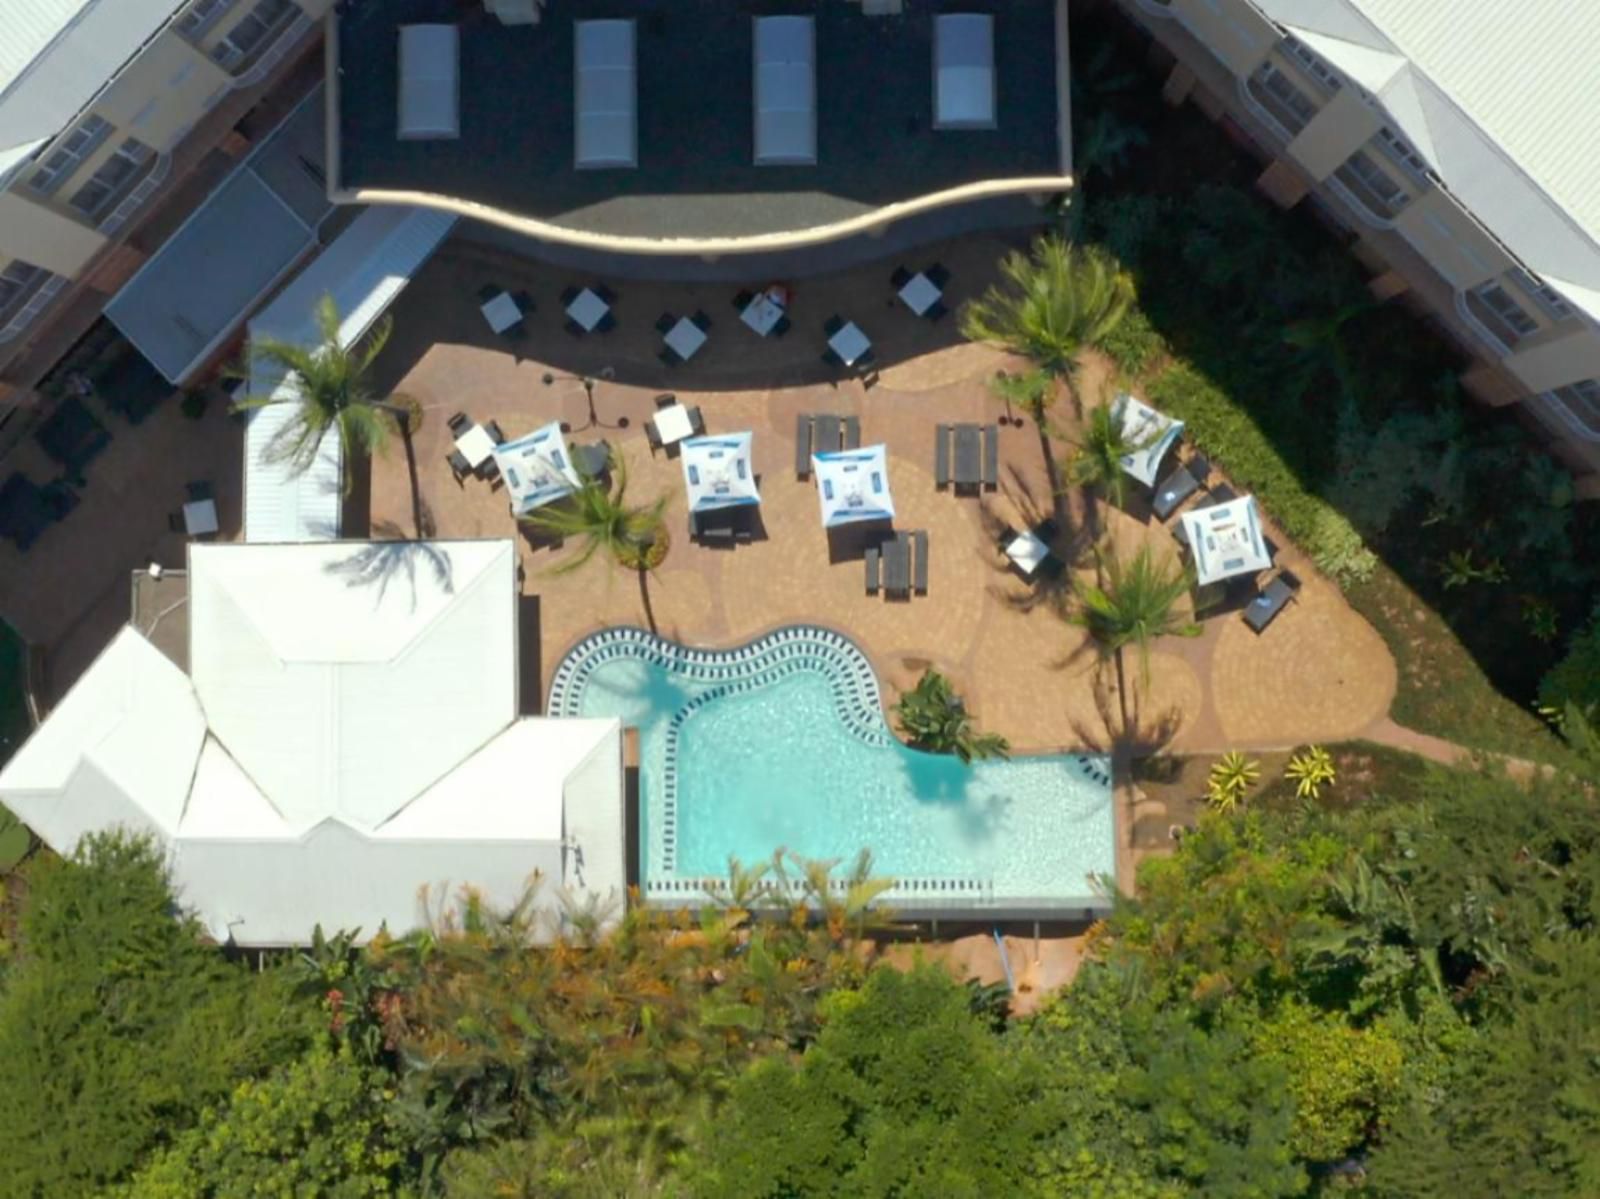 Riverside Hotel Prospect Hall Durban Kwazulu Natal South Africa Palm Tree, Plant, Nature, Wood, Swimming Pool